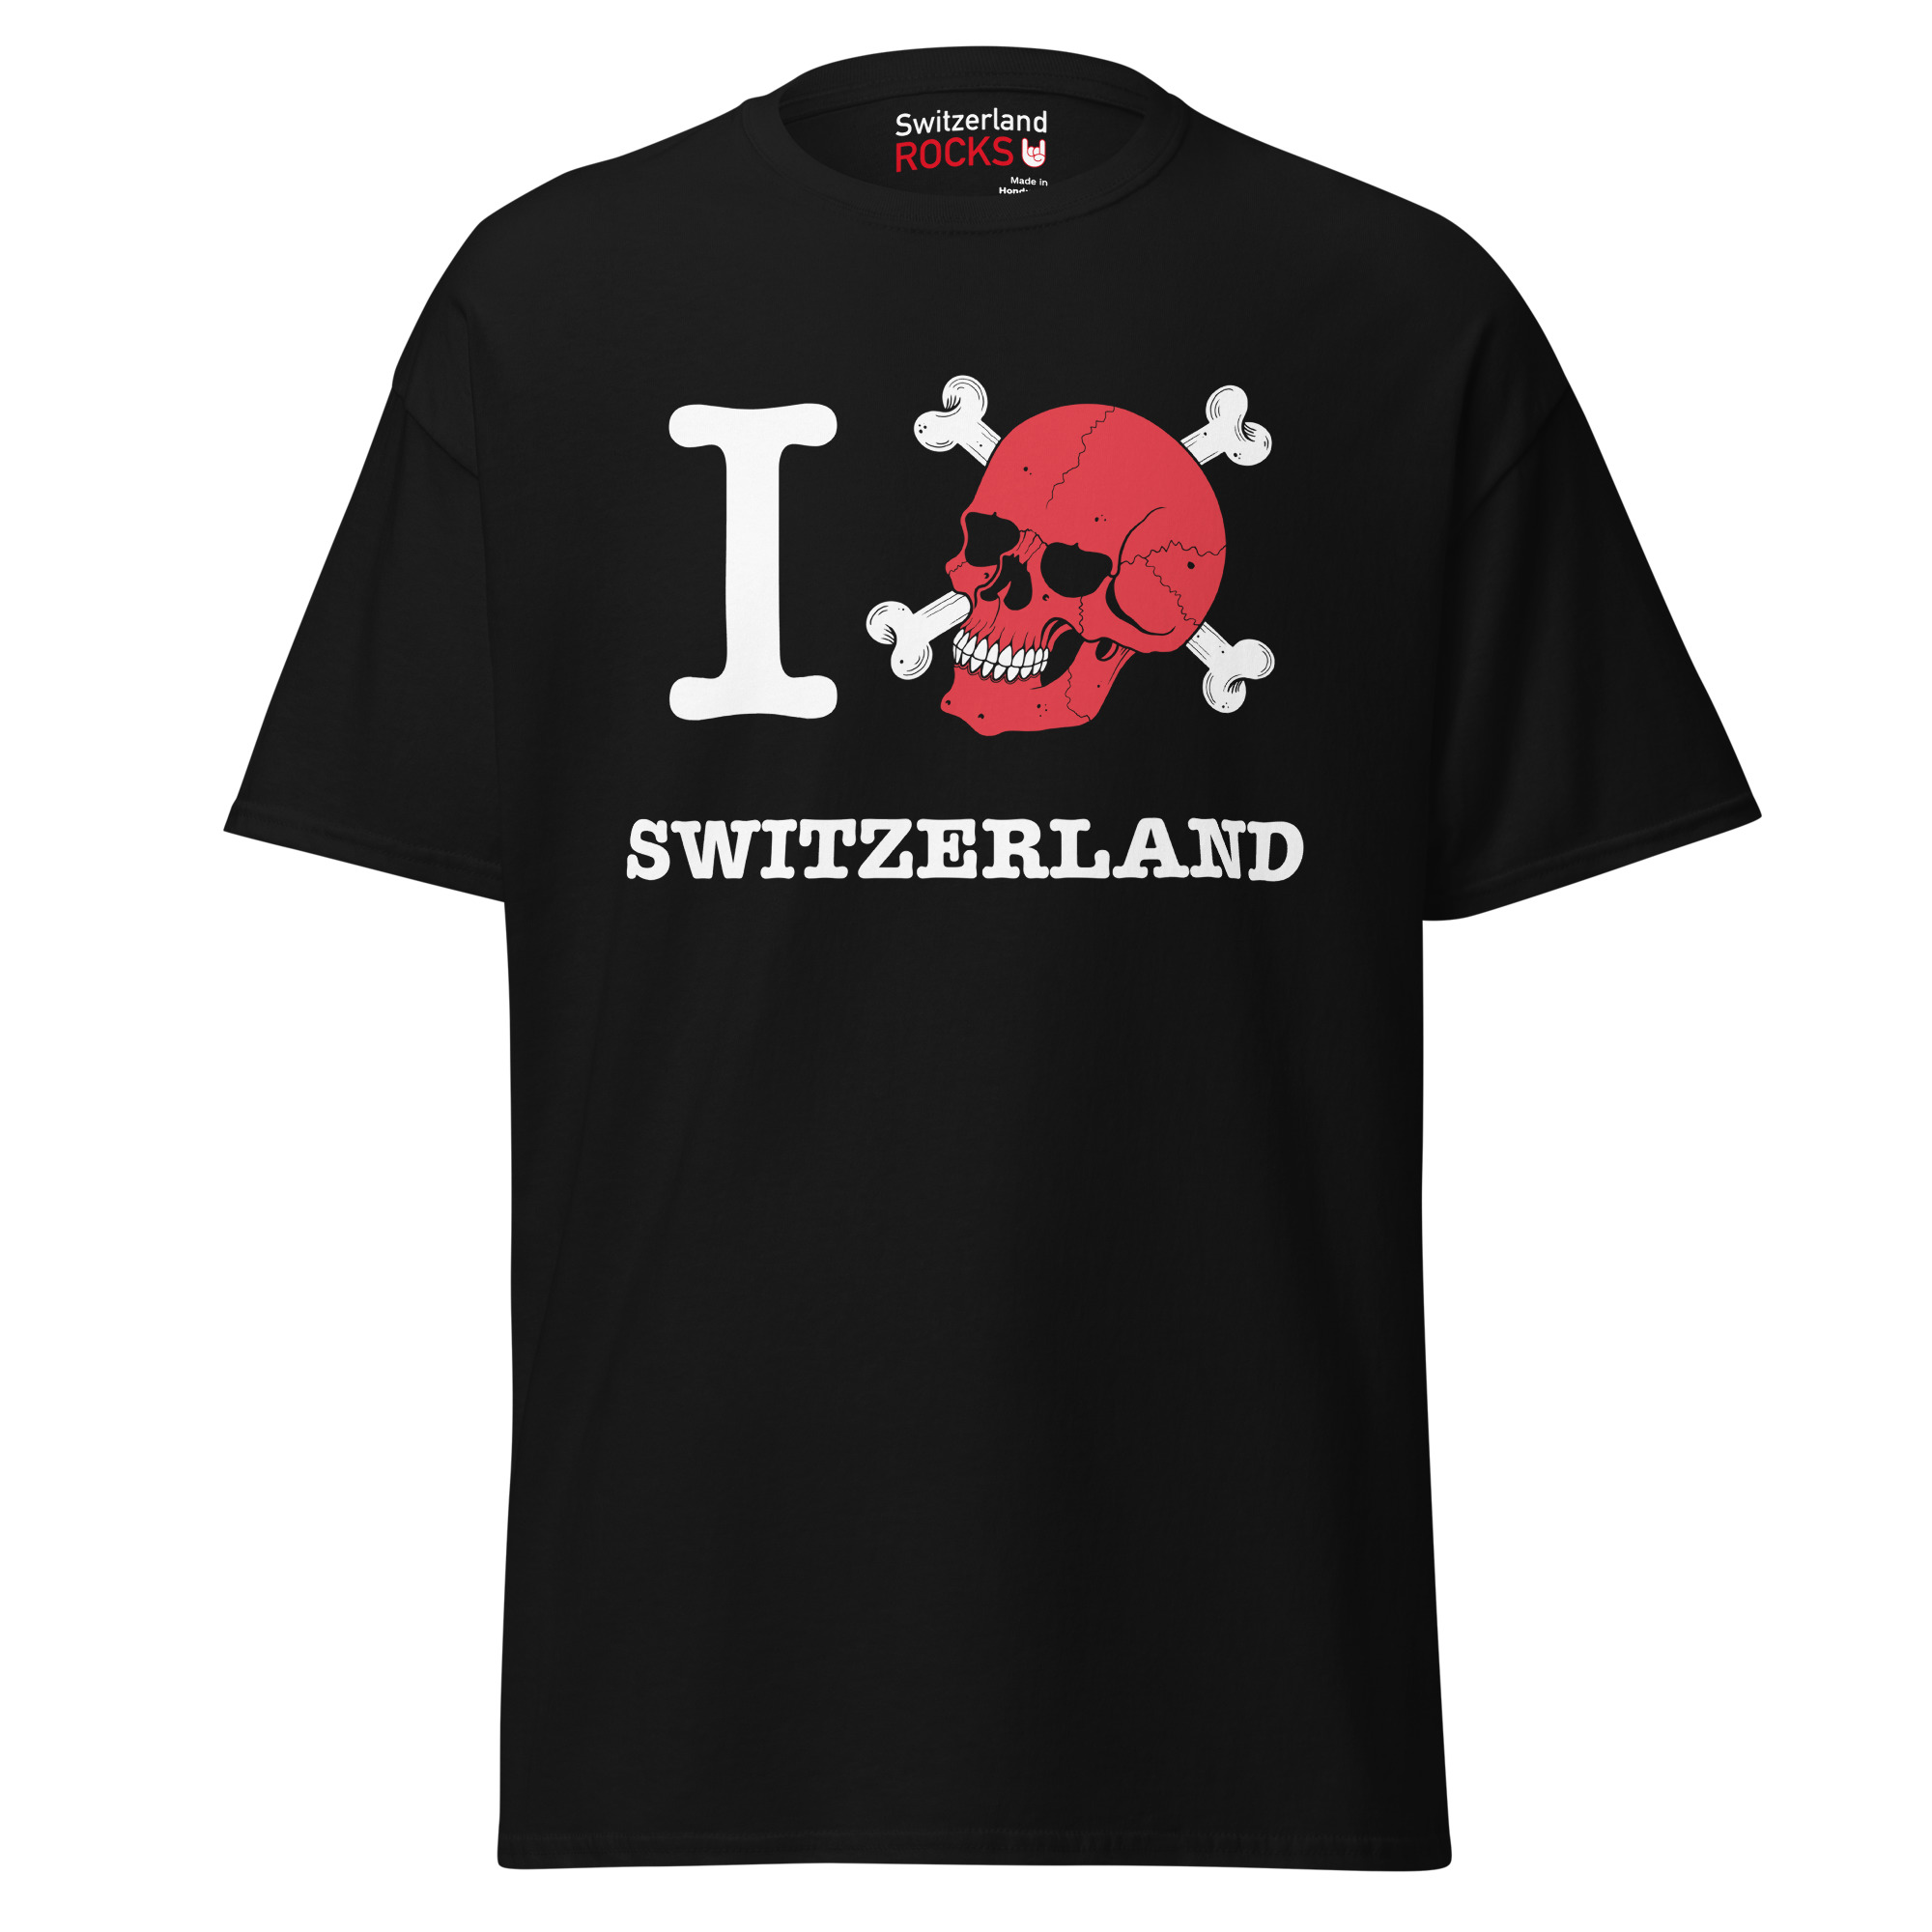 Black T-shirt – Switzerland Rocks – Skull Men's Clothing Wearyt